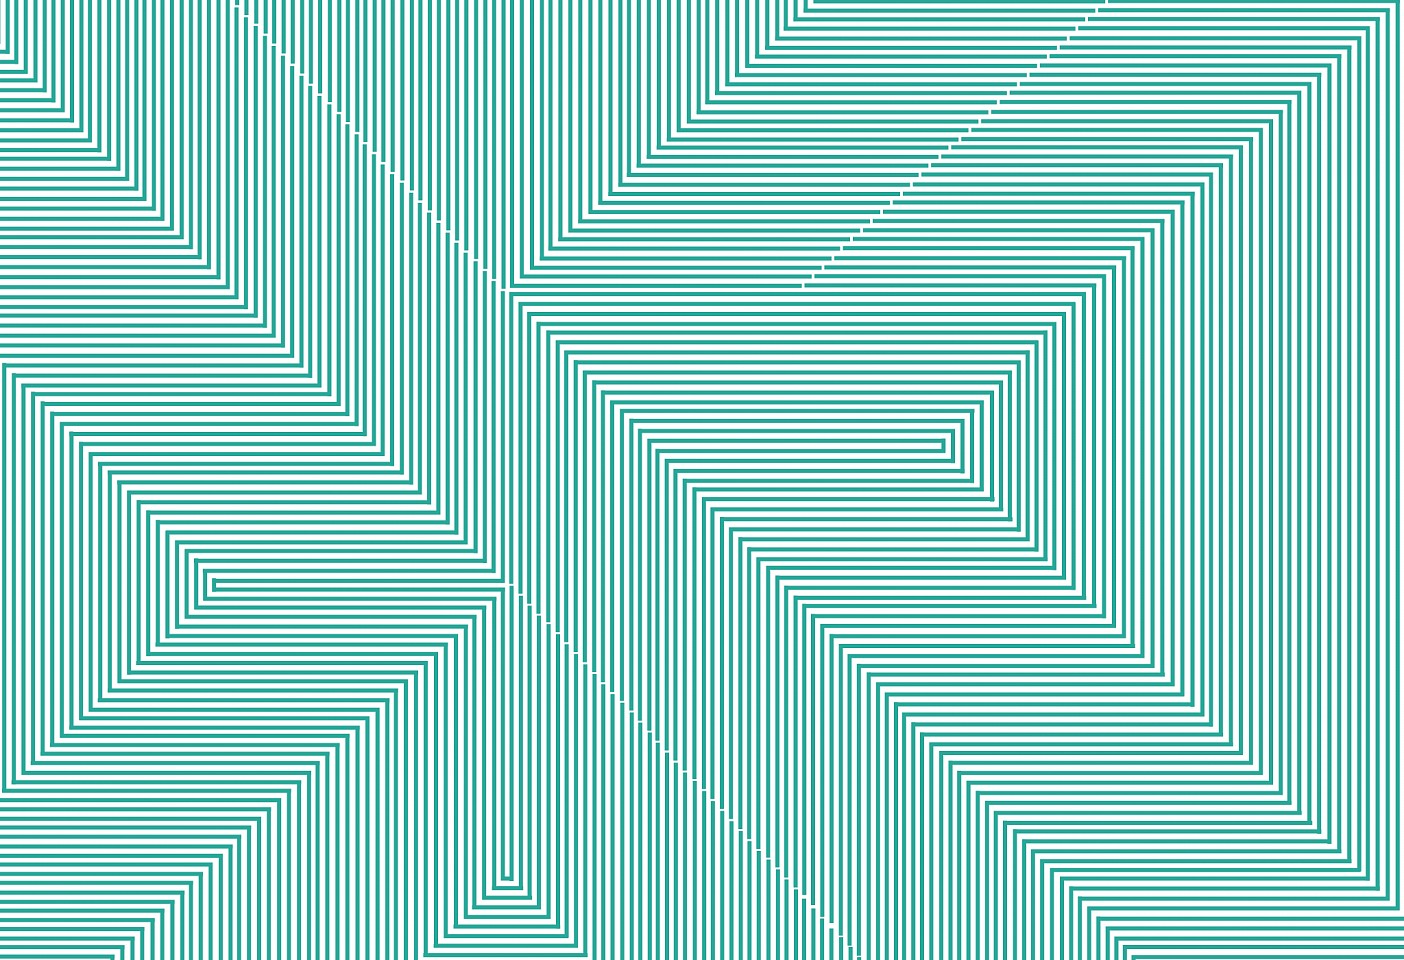 Dane Albert, Color Sticks #29 (mono), 2023
Acrylic on canvas (Concept), 48 x 72 in. (121.9 x 182.9 cm)
Series of colored lines and shapes in multiple configurations
DA.2023.sticks-029-mono